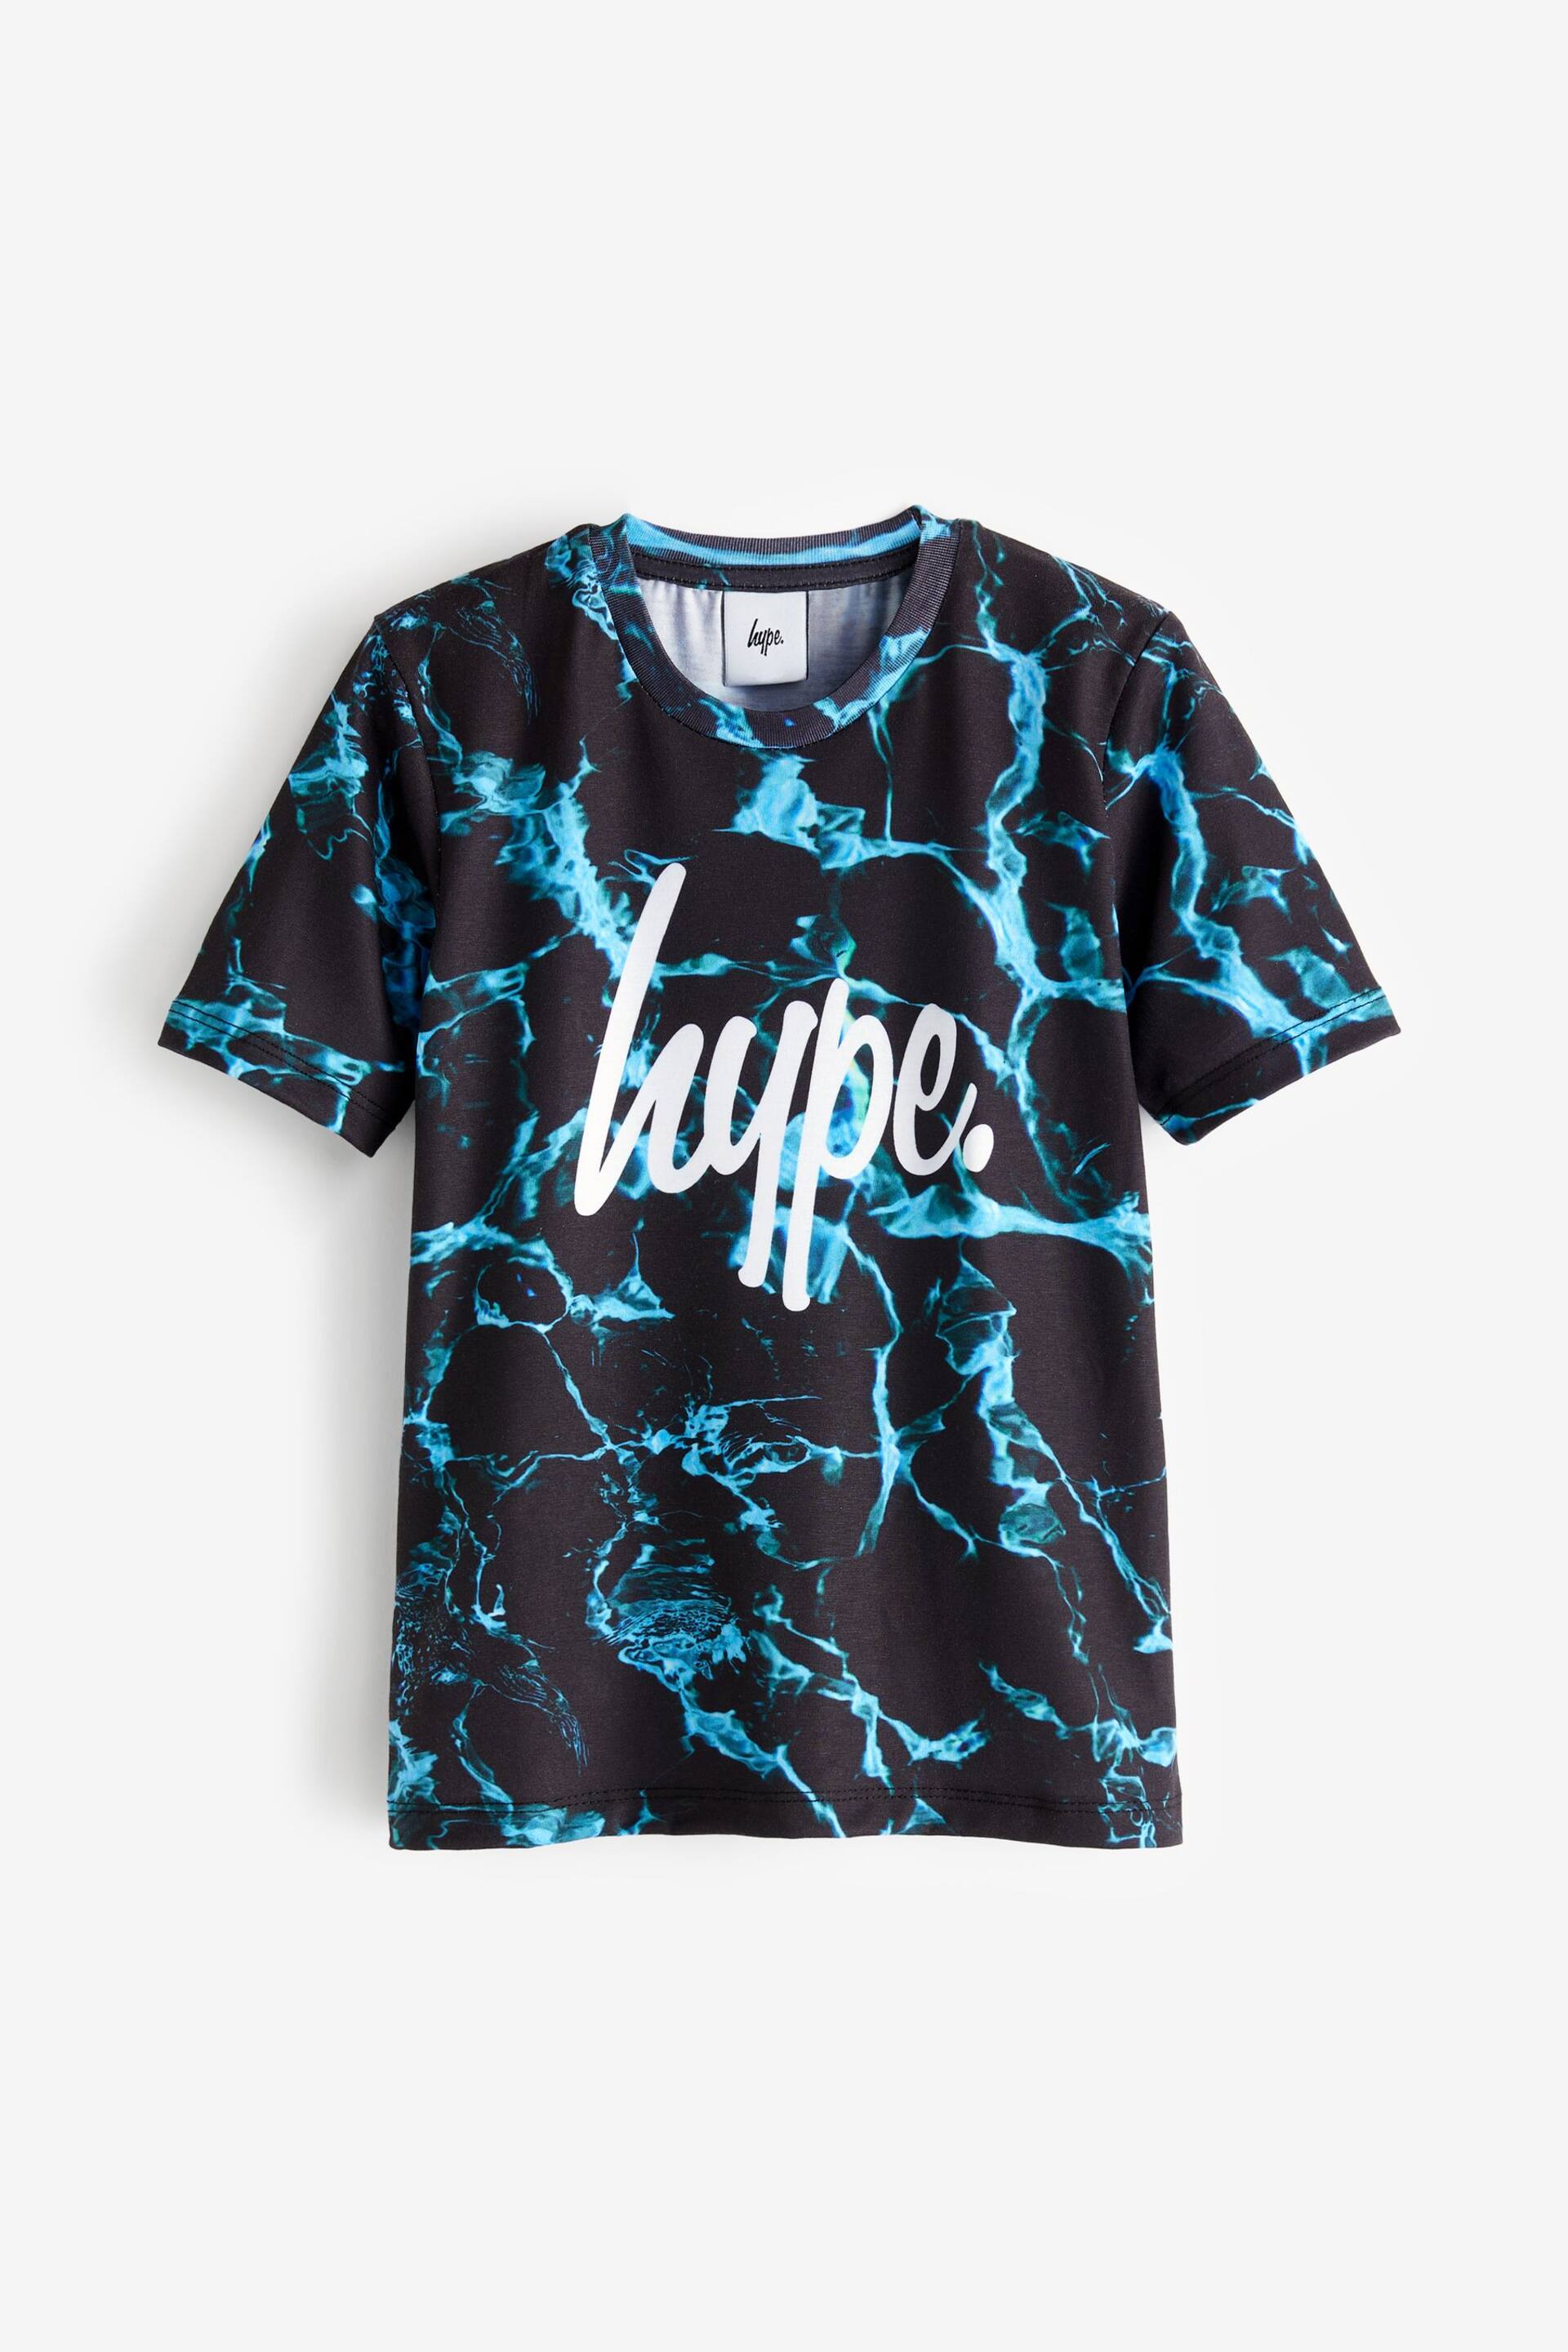 Hype. Boys Blue Multi Xray Pool T-Shirt - Image 1 of 3